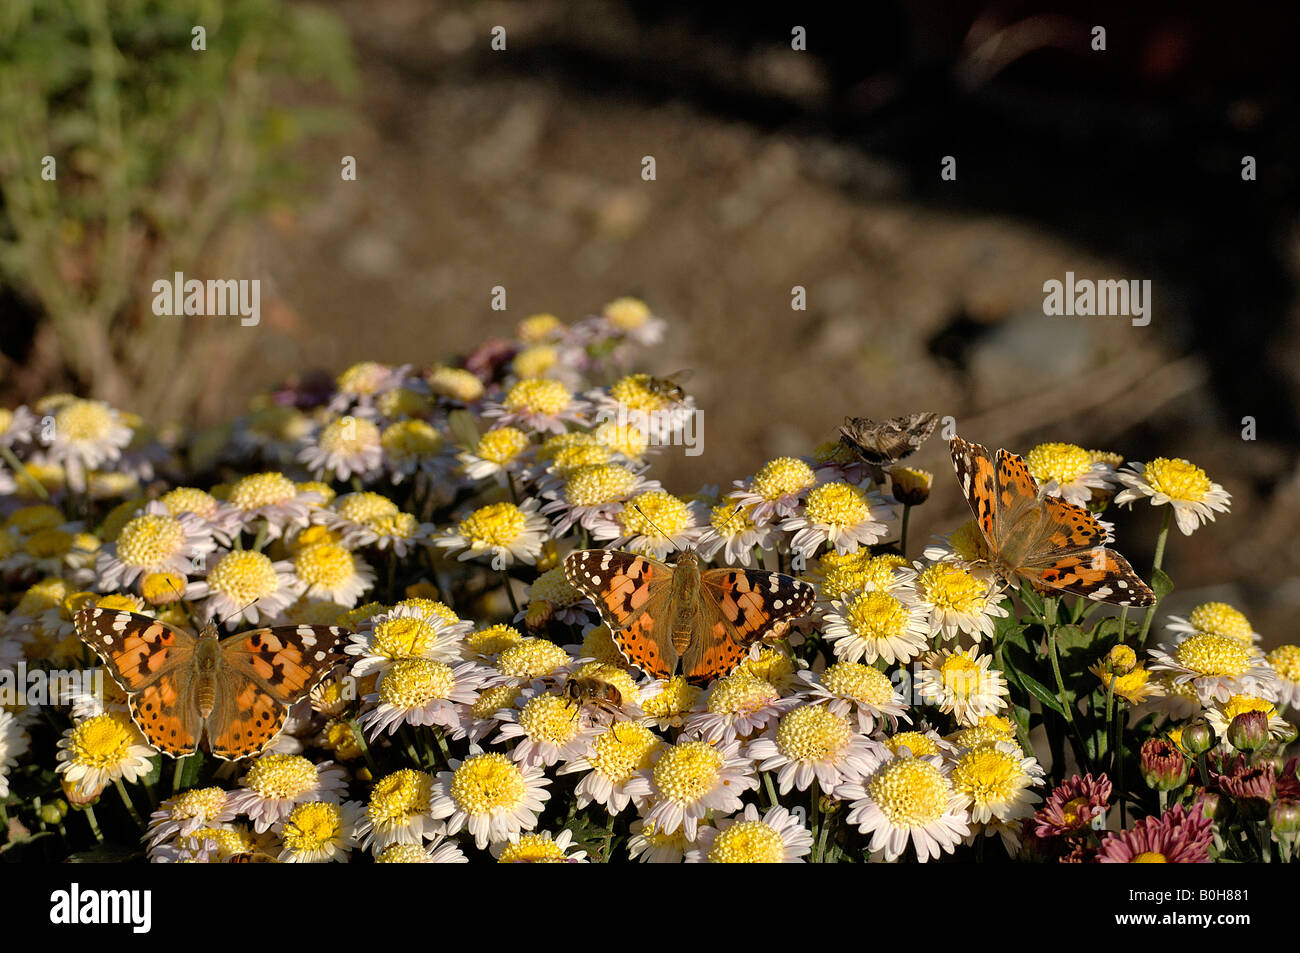 Painted lady butterflies Vanessa cardu feeding on chrysanthemums in Urumqi Botanic Garden China Stock Photo